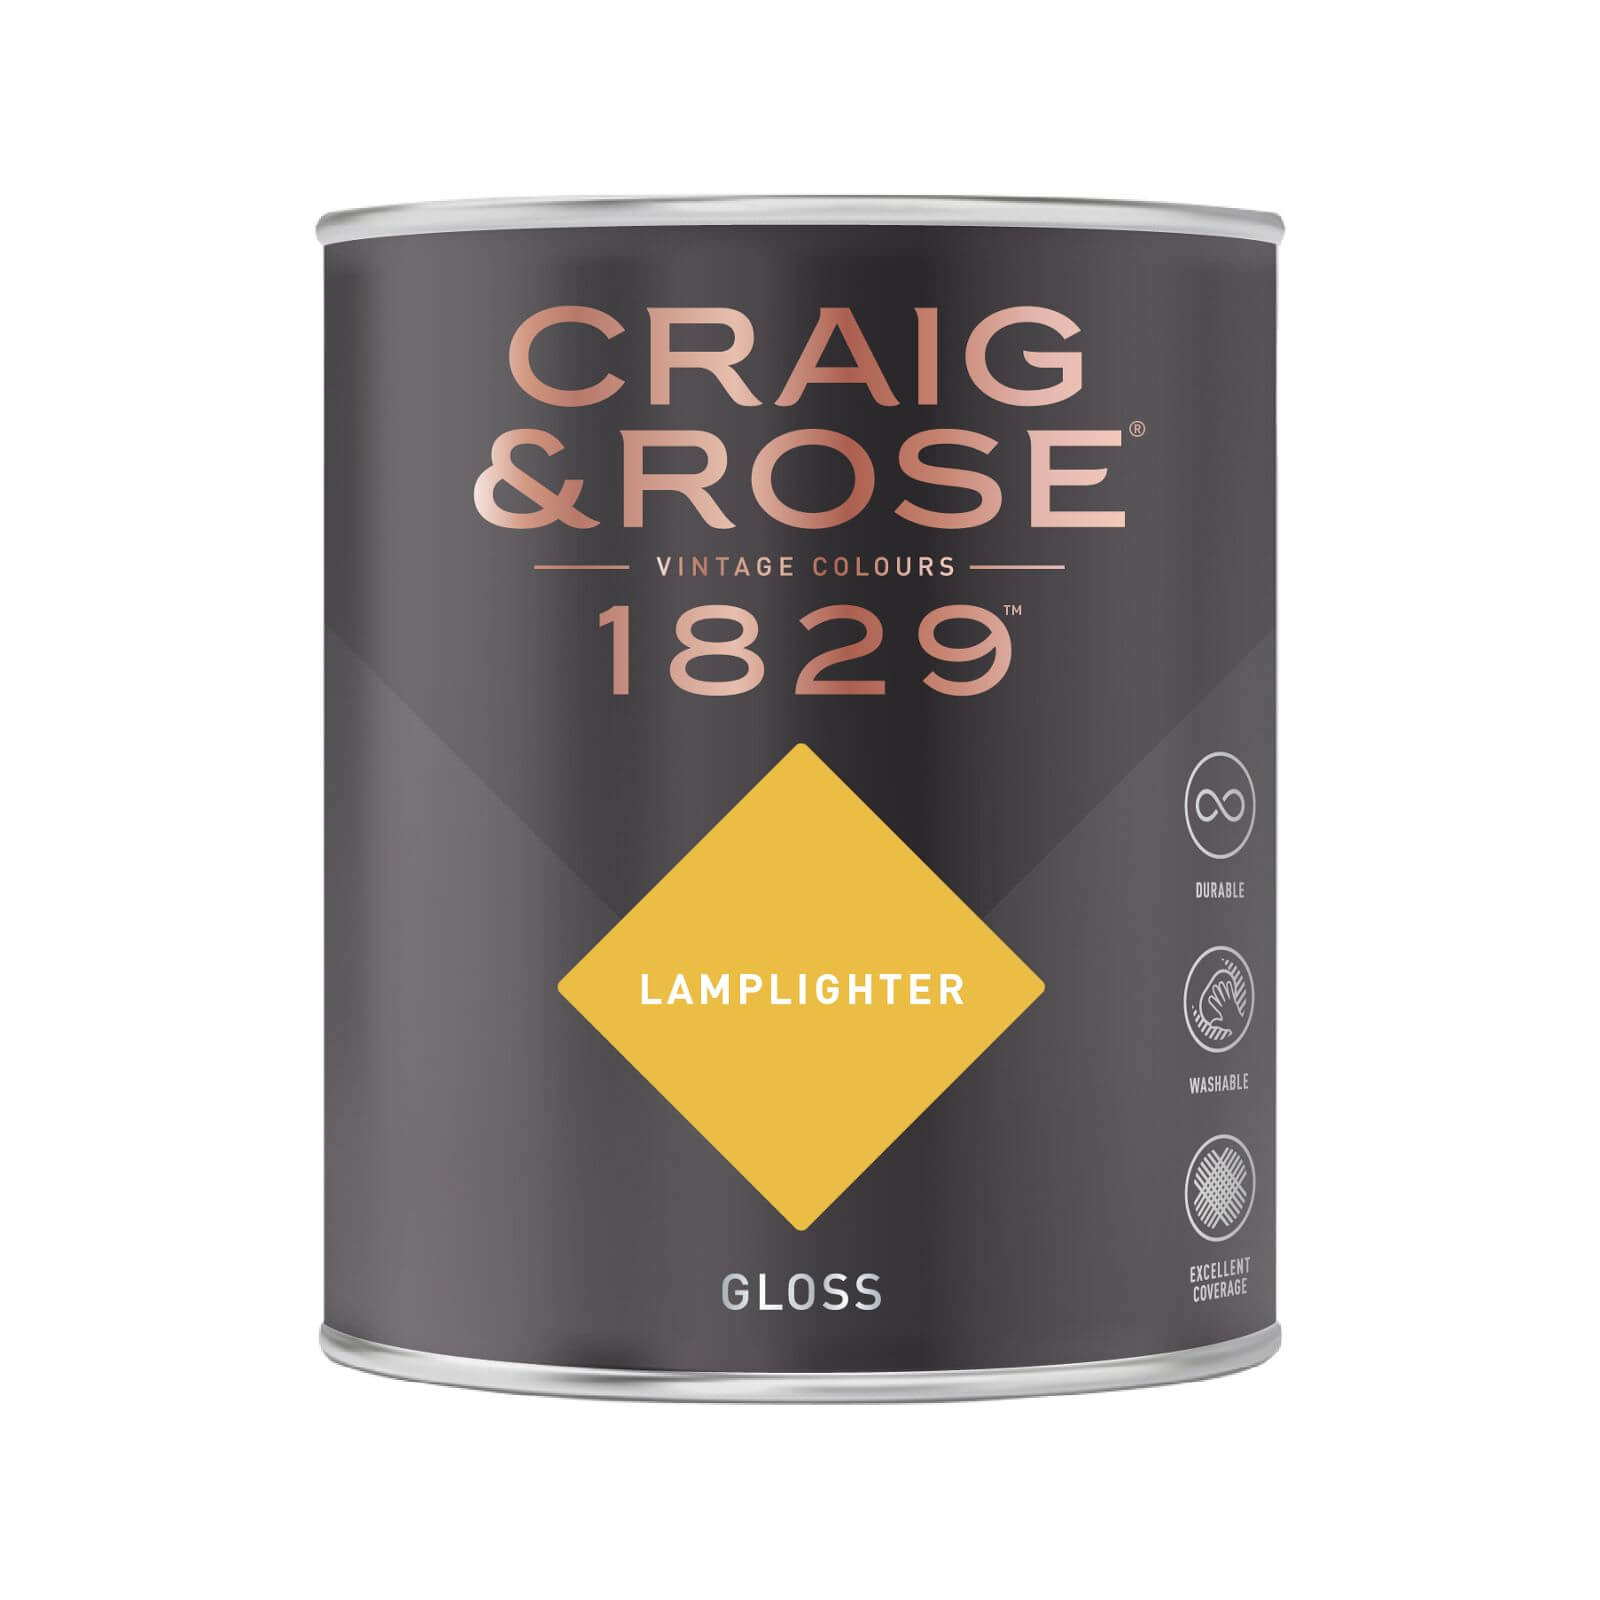 Craig & Rose 1829 Gloss Paint Lamplighter - 750ml